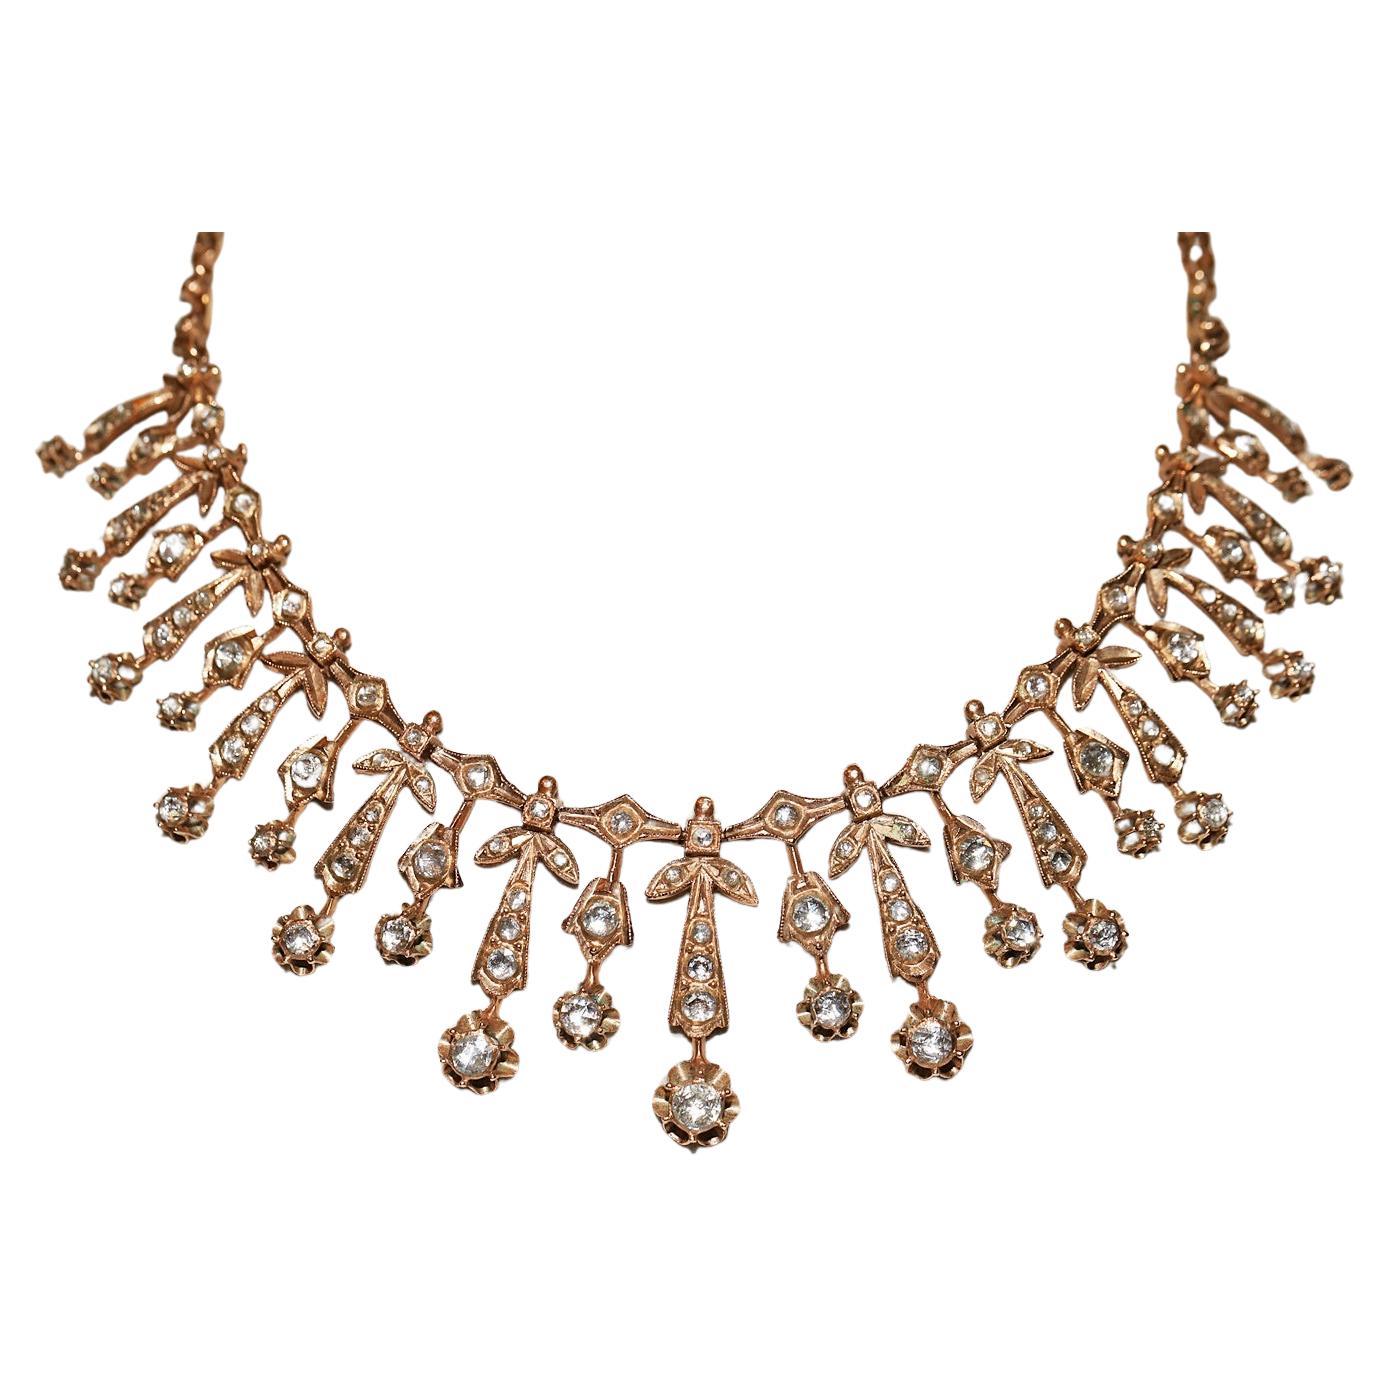 Antique  Circa 1900s 10k Gold Natural Rose Cut Diamond Decorated Necklace